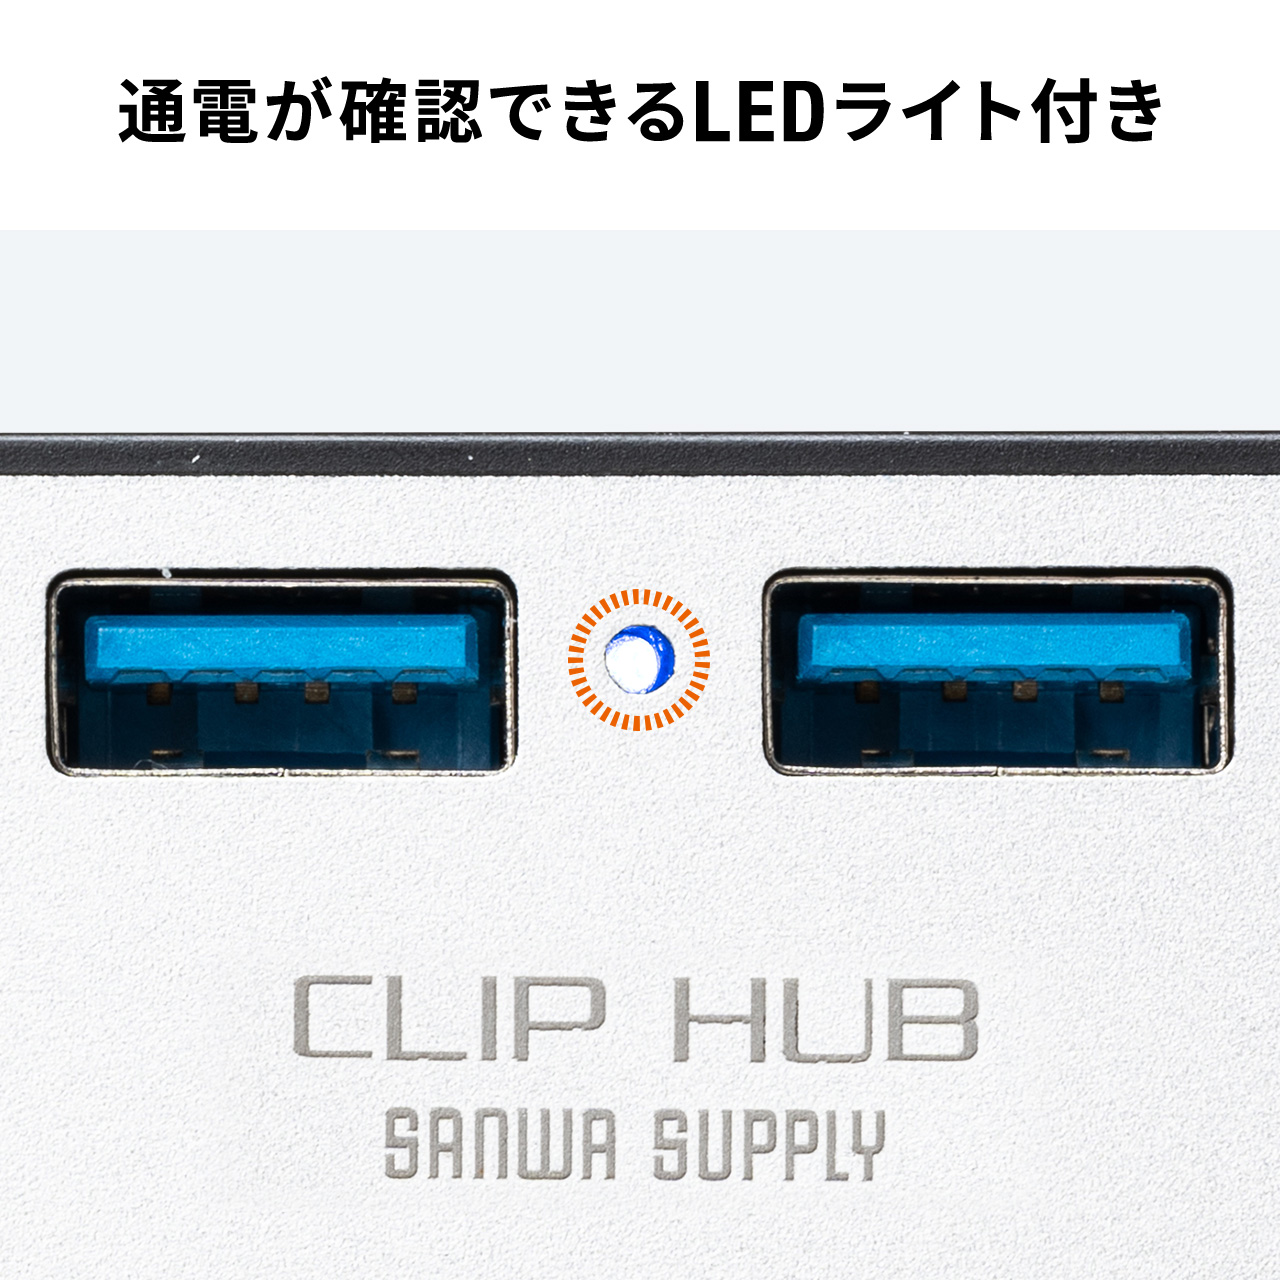 USBハブ 4ポート クランプ クリップ 机 天板 モニター 固定 取り付け Type-C USB-A 対応 バスパワー コンパクト 高速データ転送 ケーブル 1.5m 400-HUBC065N